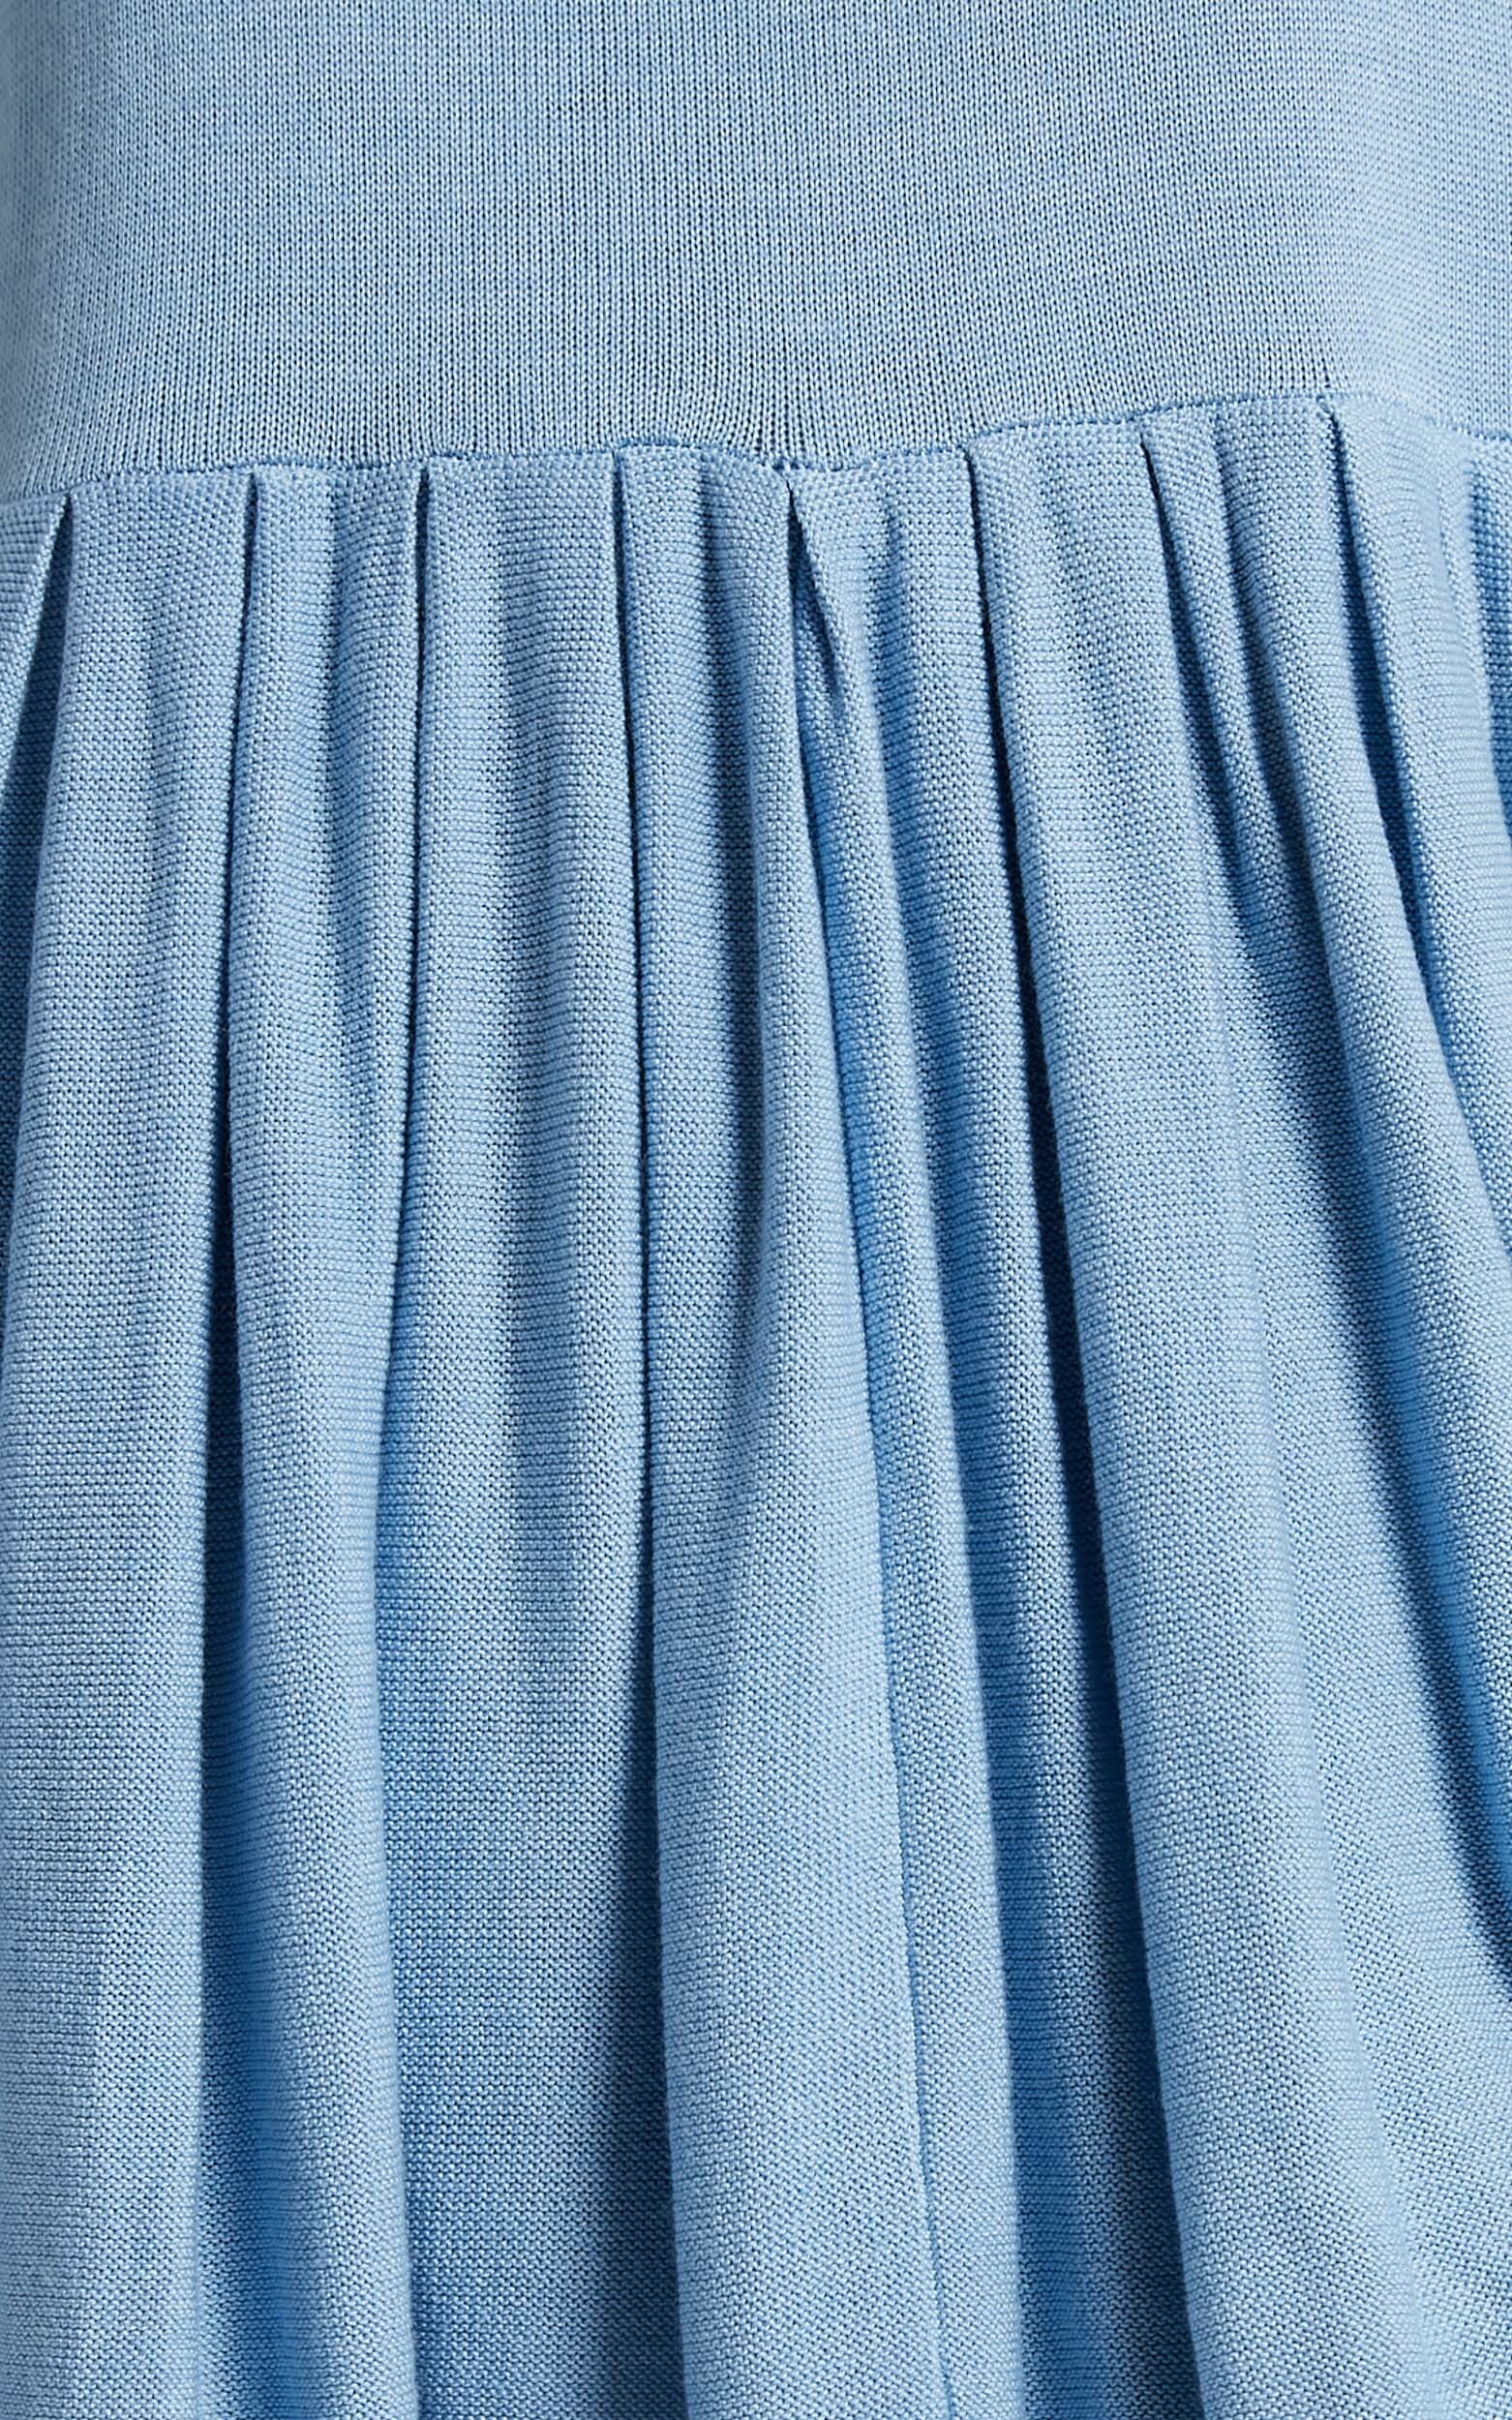 Embry Knit Dress in Powder Blue | Showpo